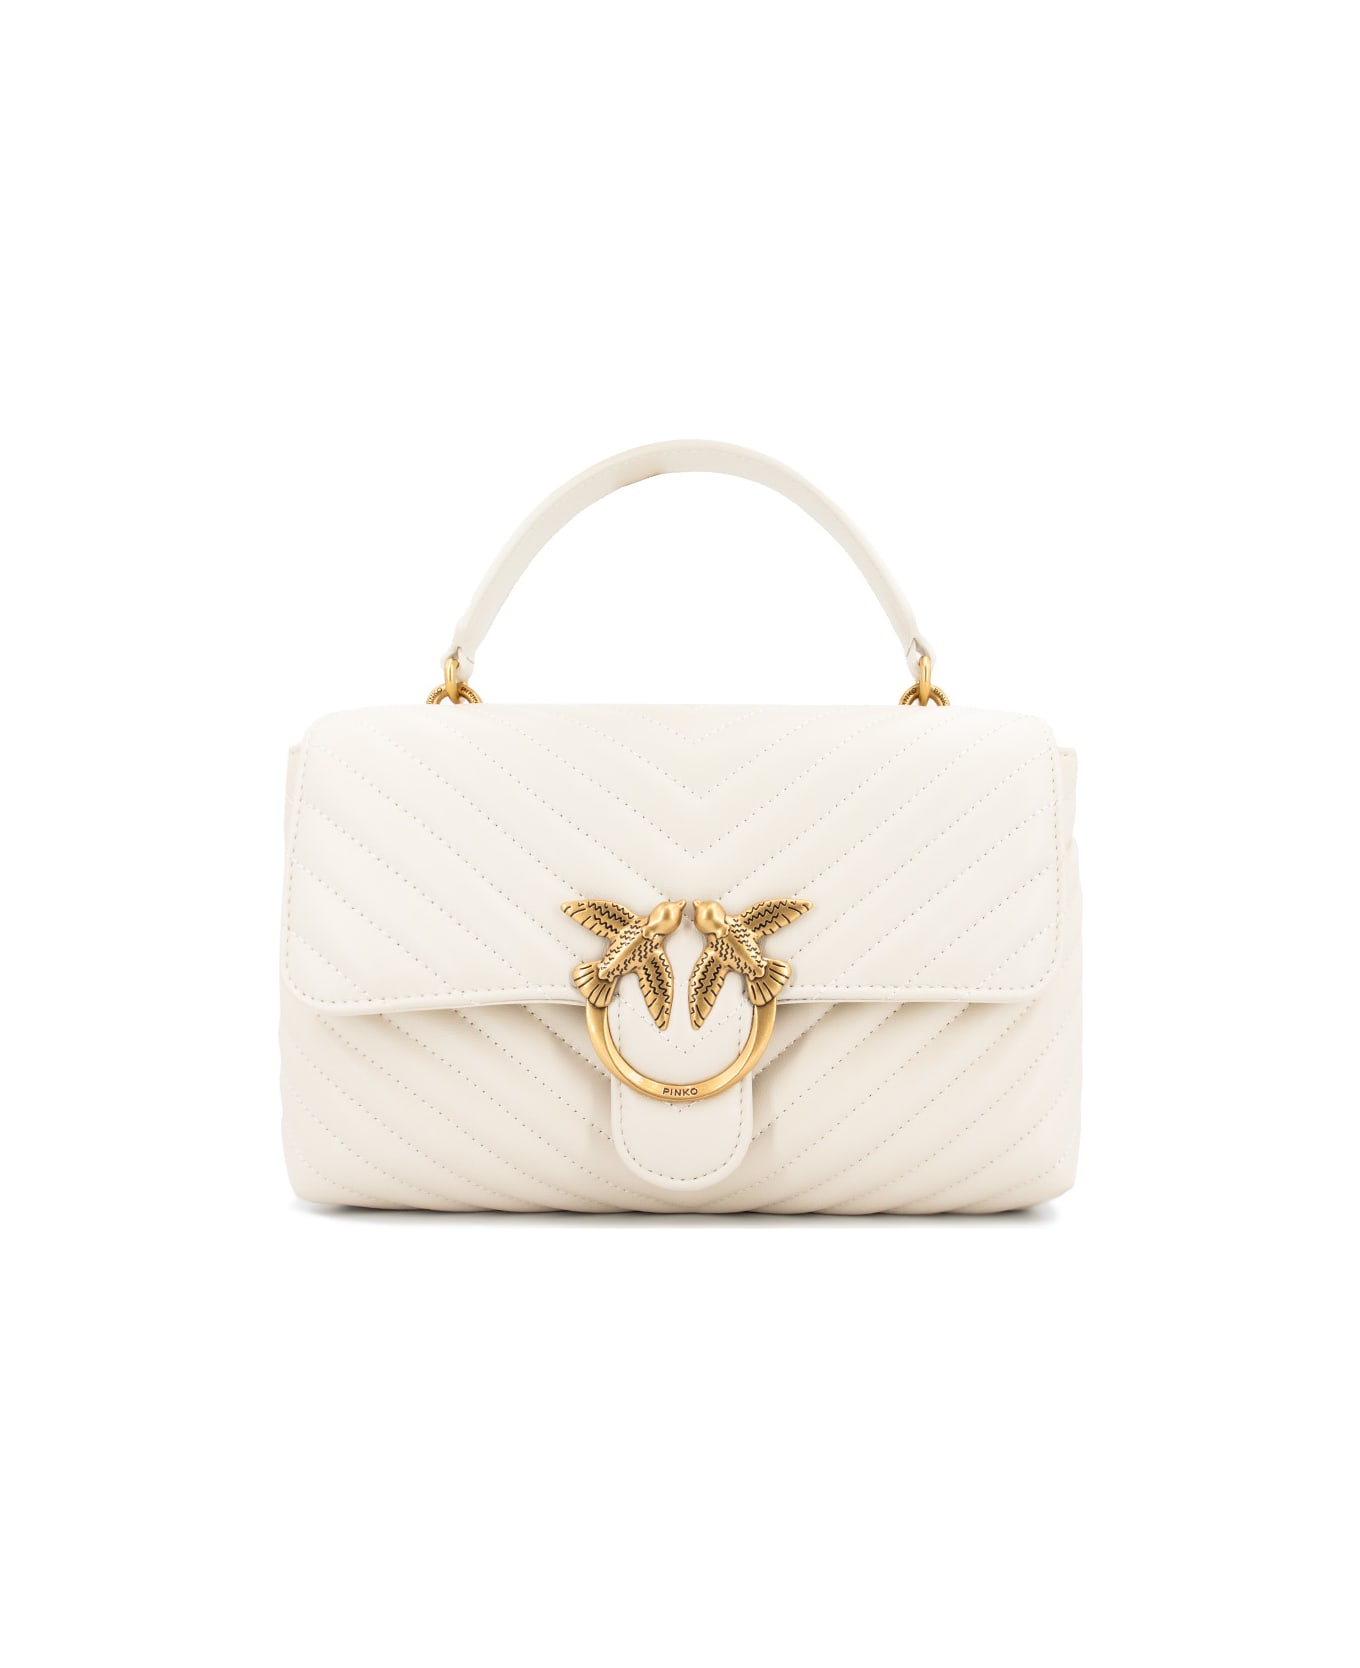 Pinko Handbag - Q Bianco Seta Antique Gold